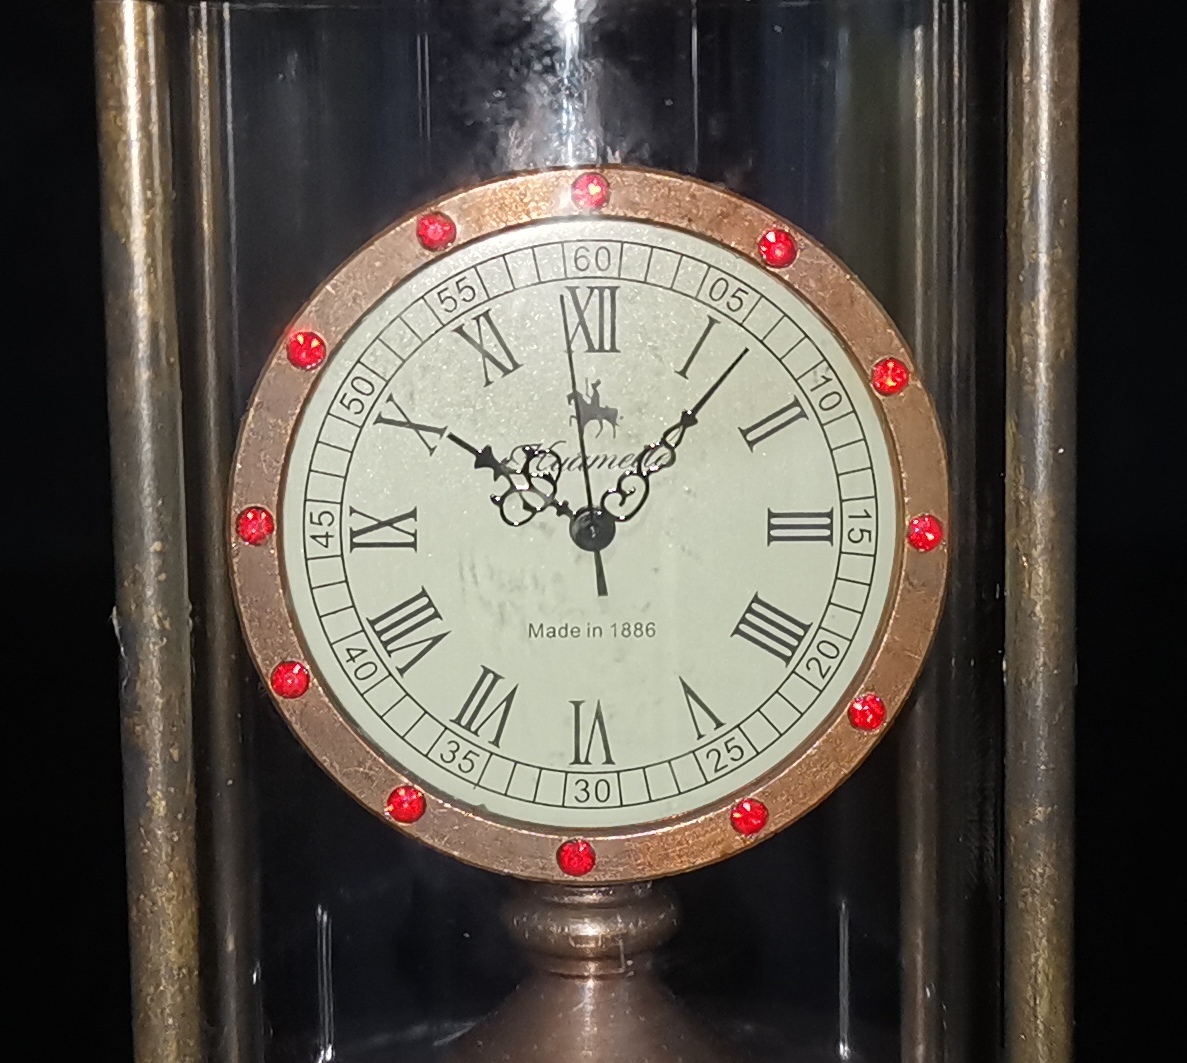  4121DM&4 中国骨董 人間国宝 [ドーム型琺瑯時計(緑花),全自動式機械式時計です] 銅器 金属工芸品 古玩收藏 復古 置物 純銅鋳造 開運風水_画像7